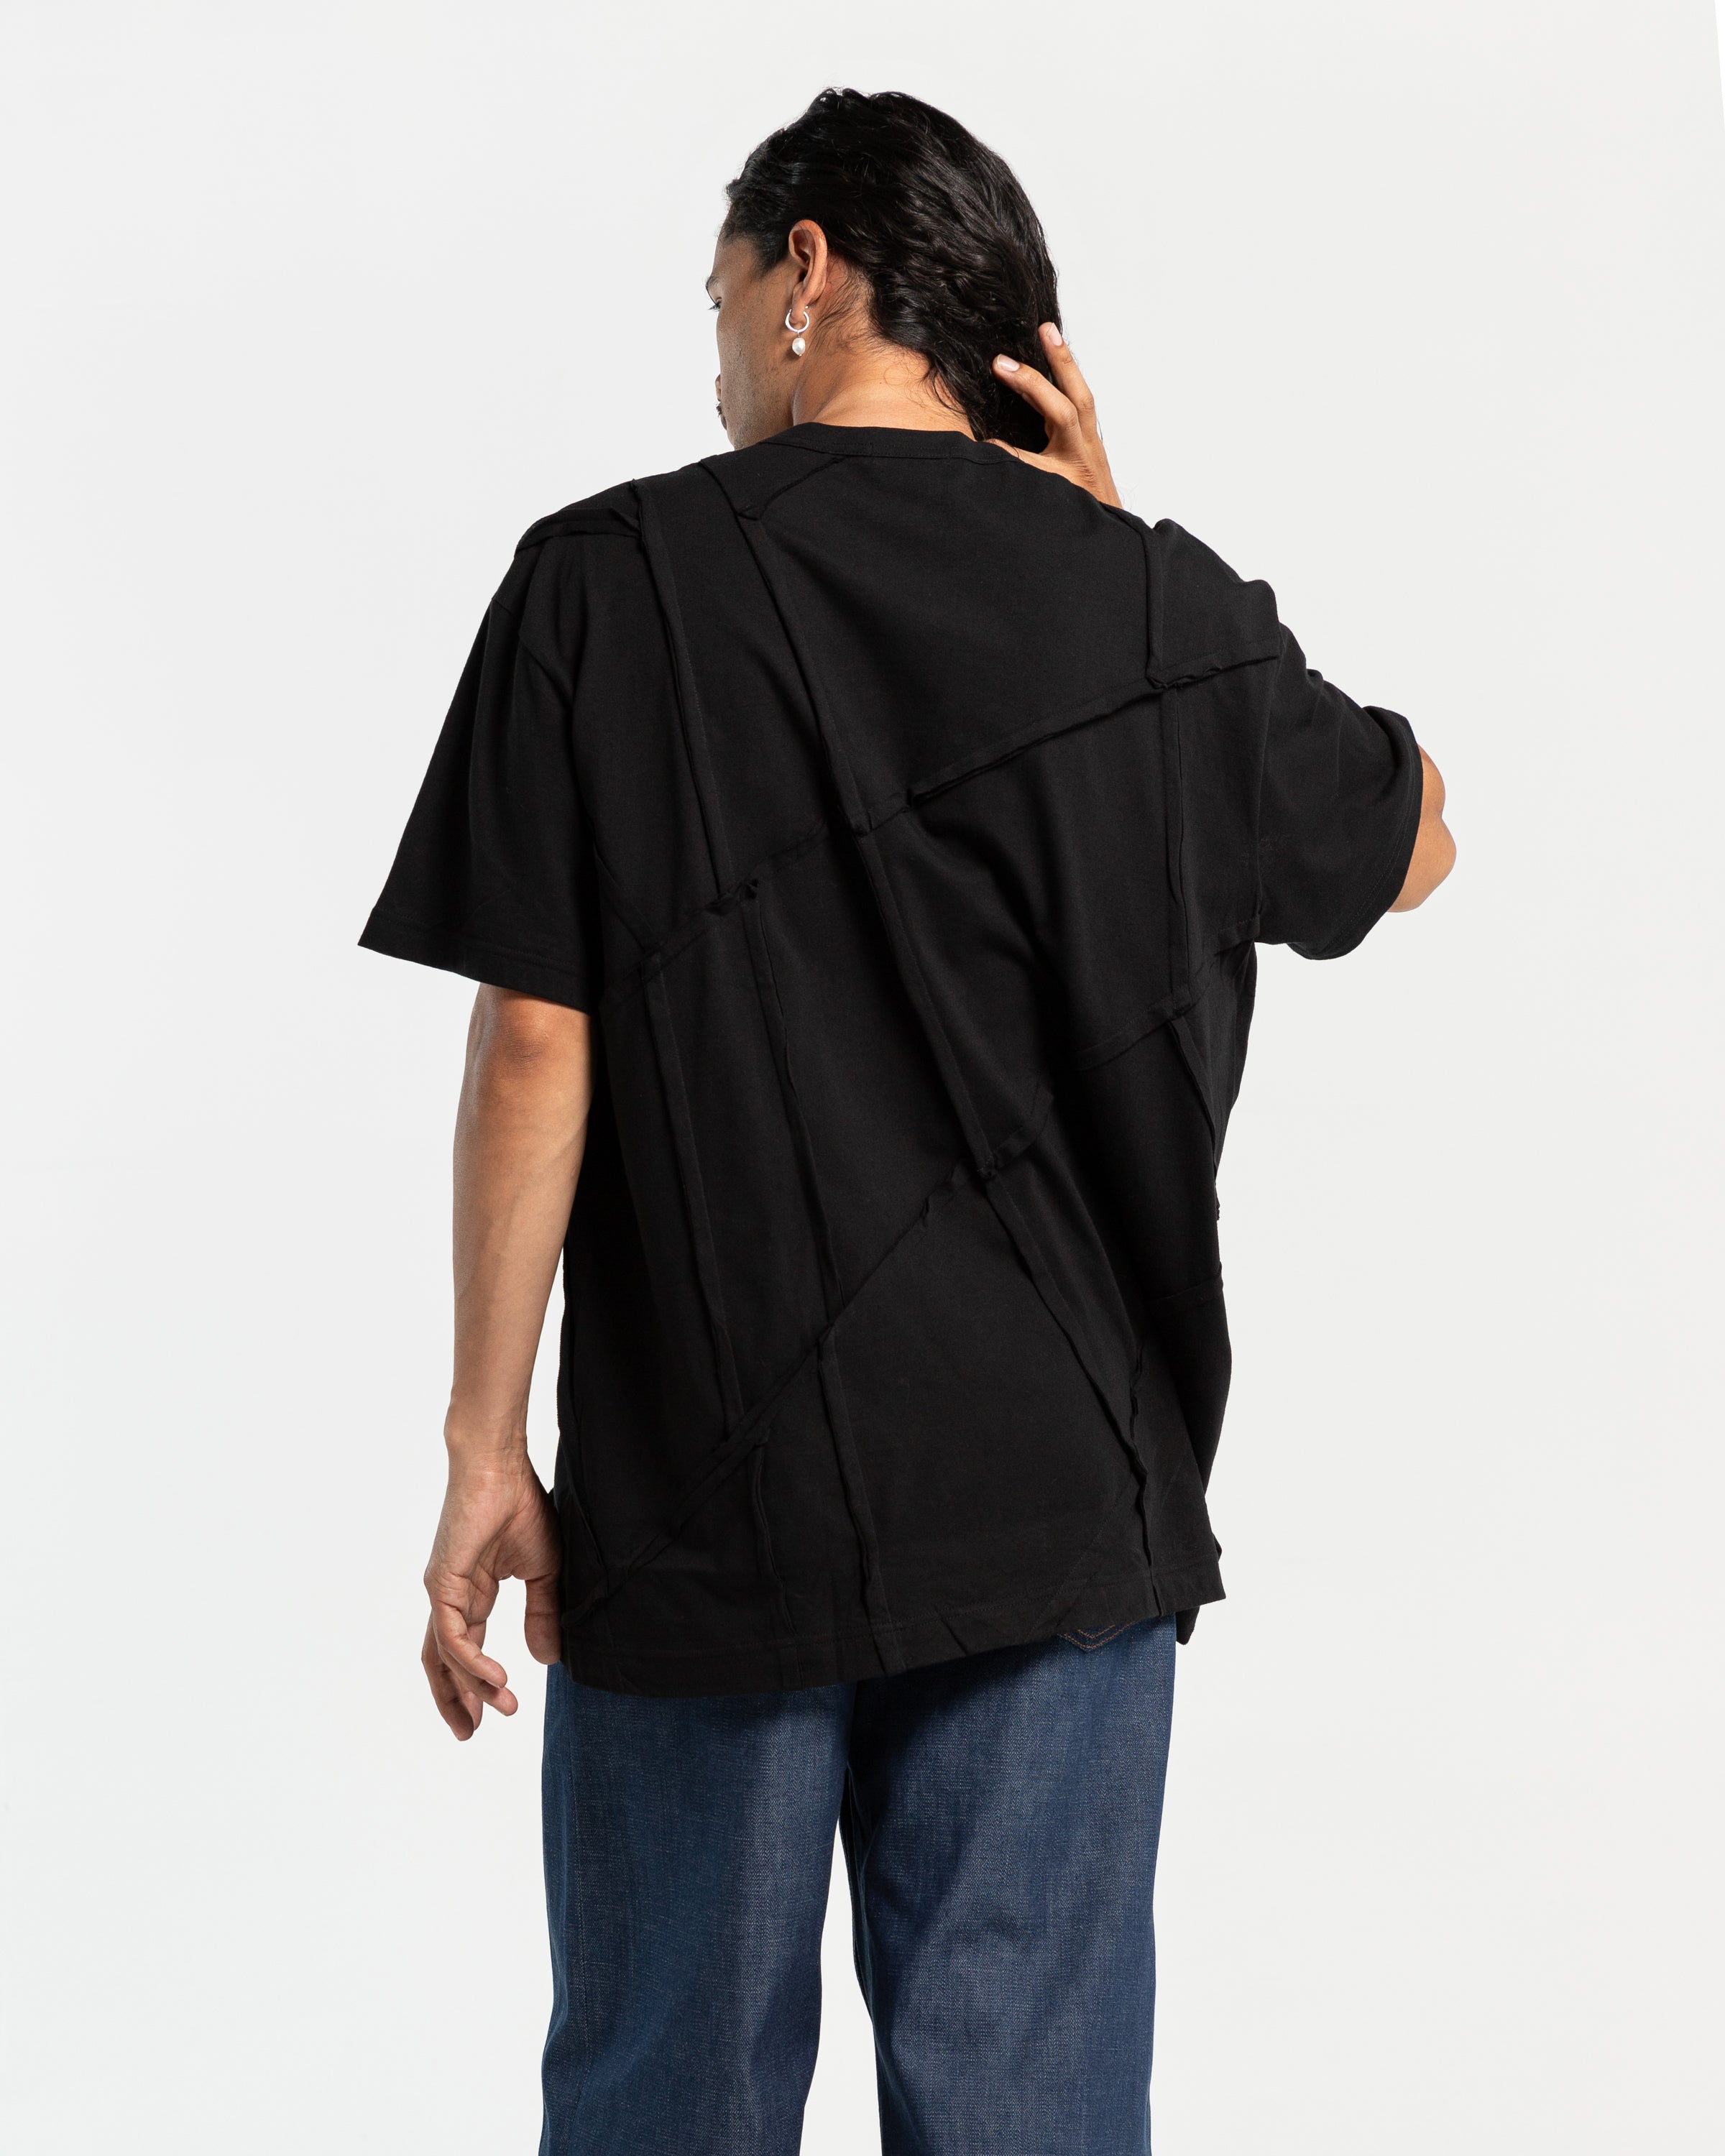 Panel Seam T-Shirt in Black